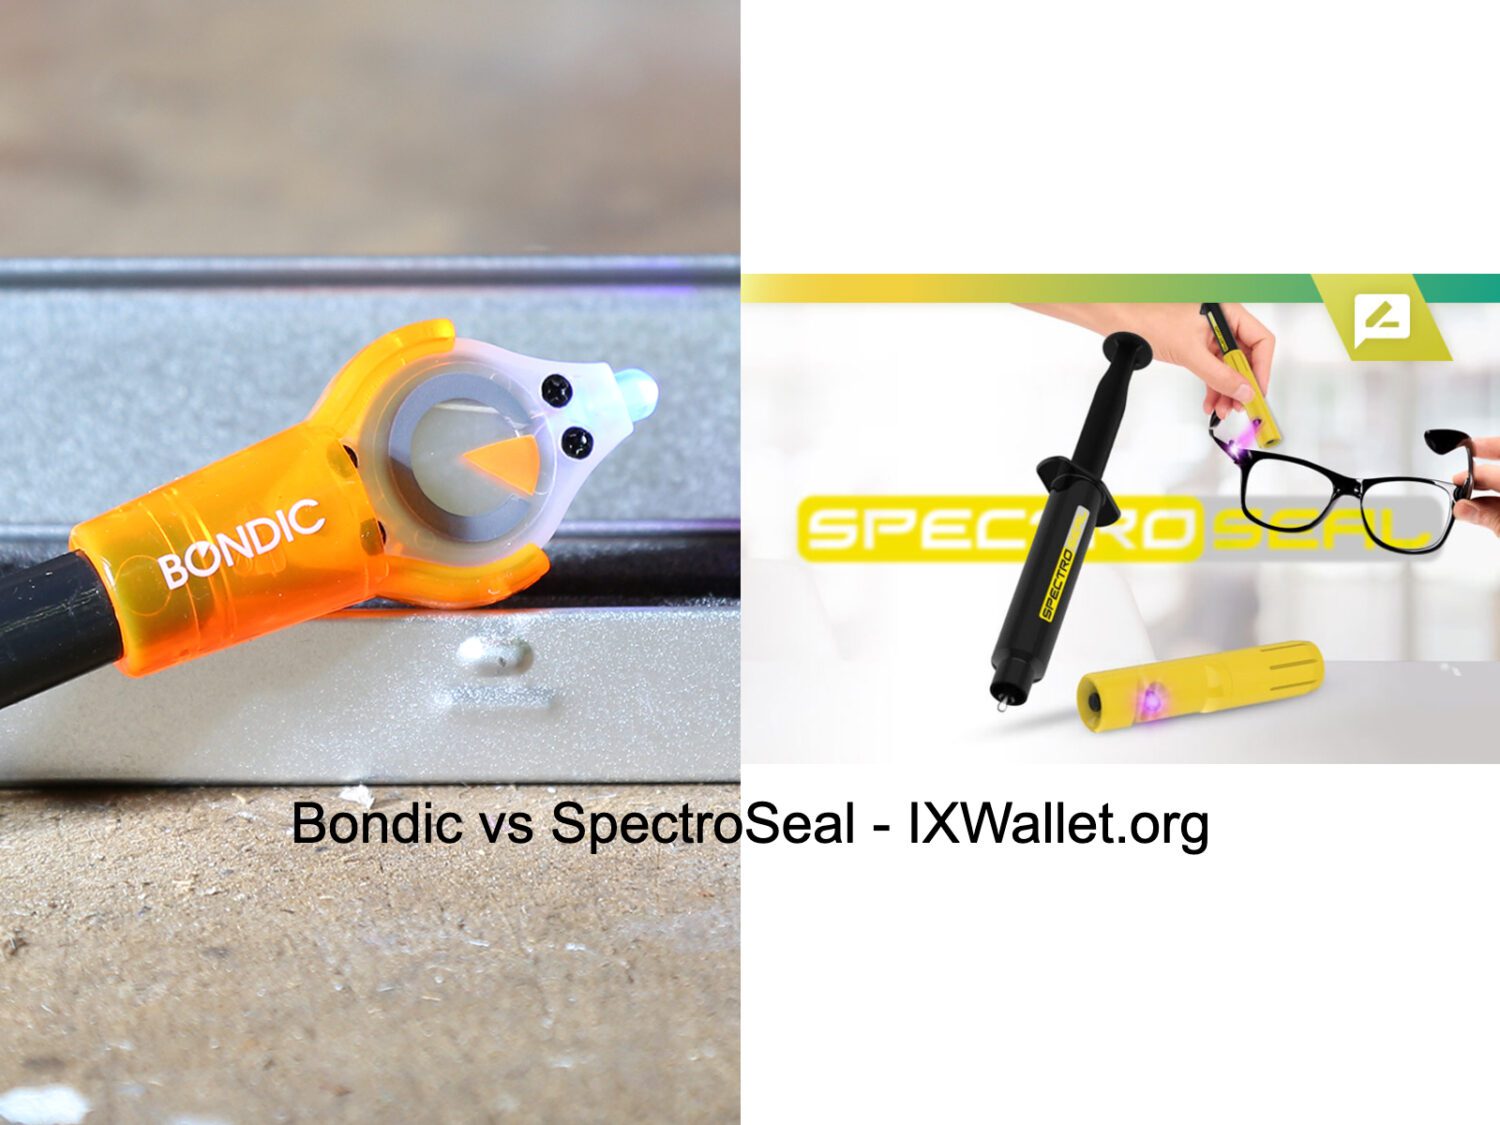 Bondic vs SpectroSeal - Complete Guide